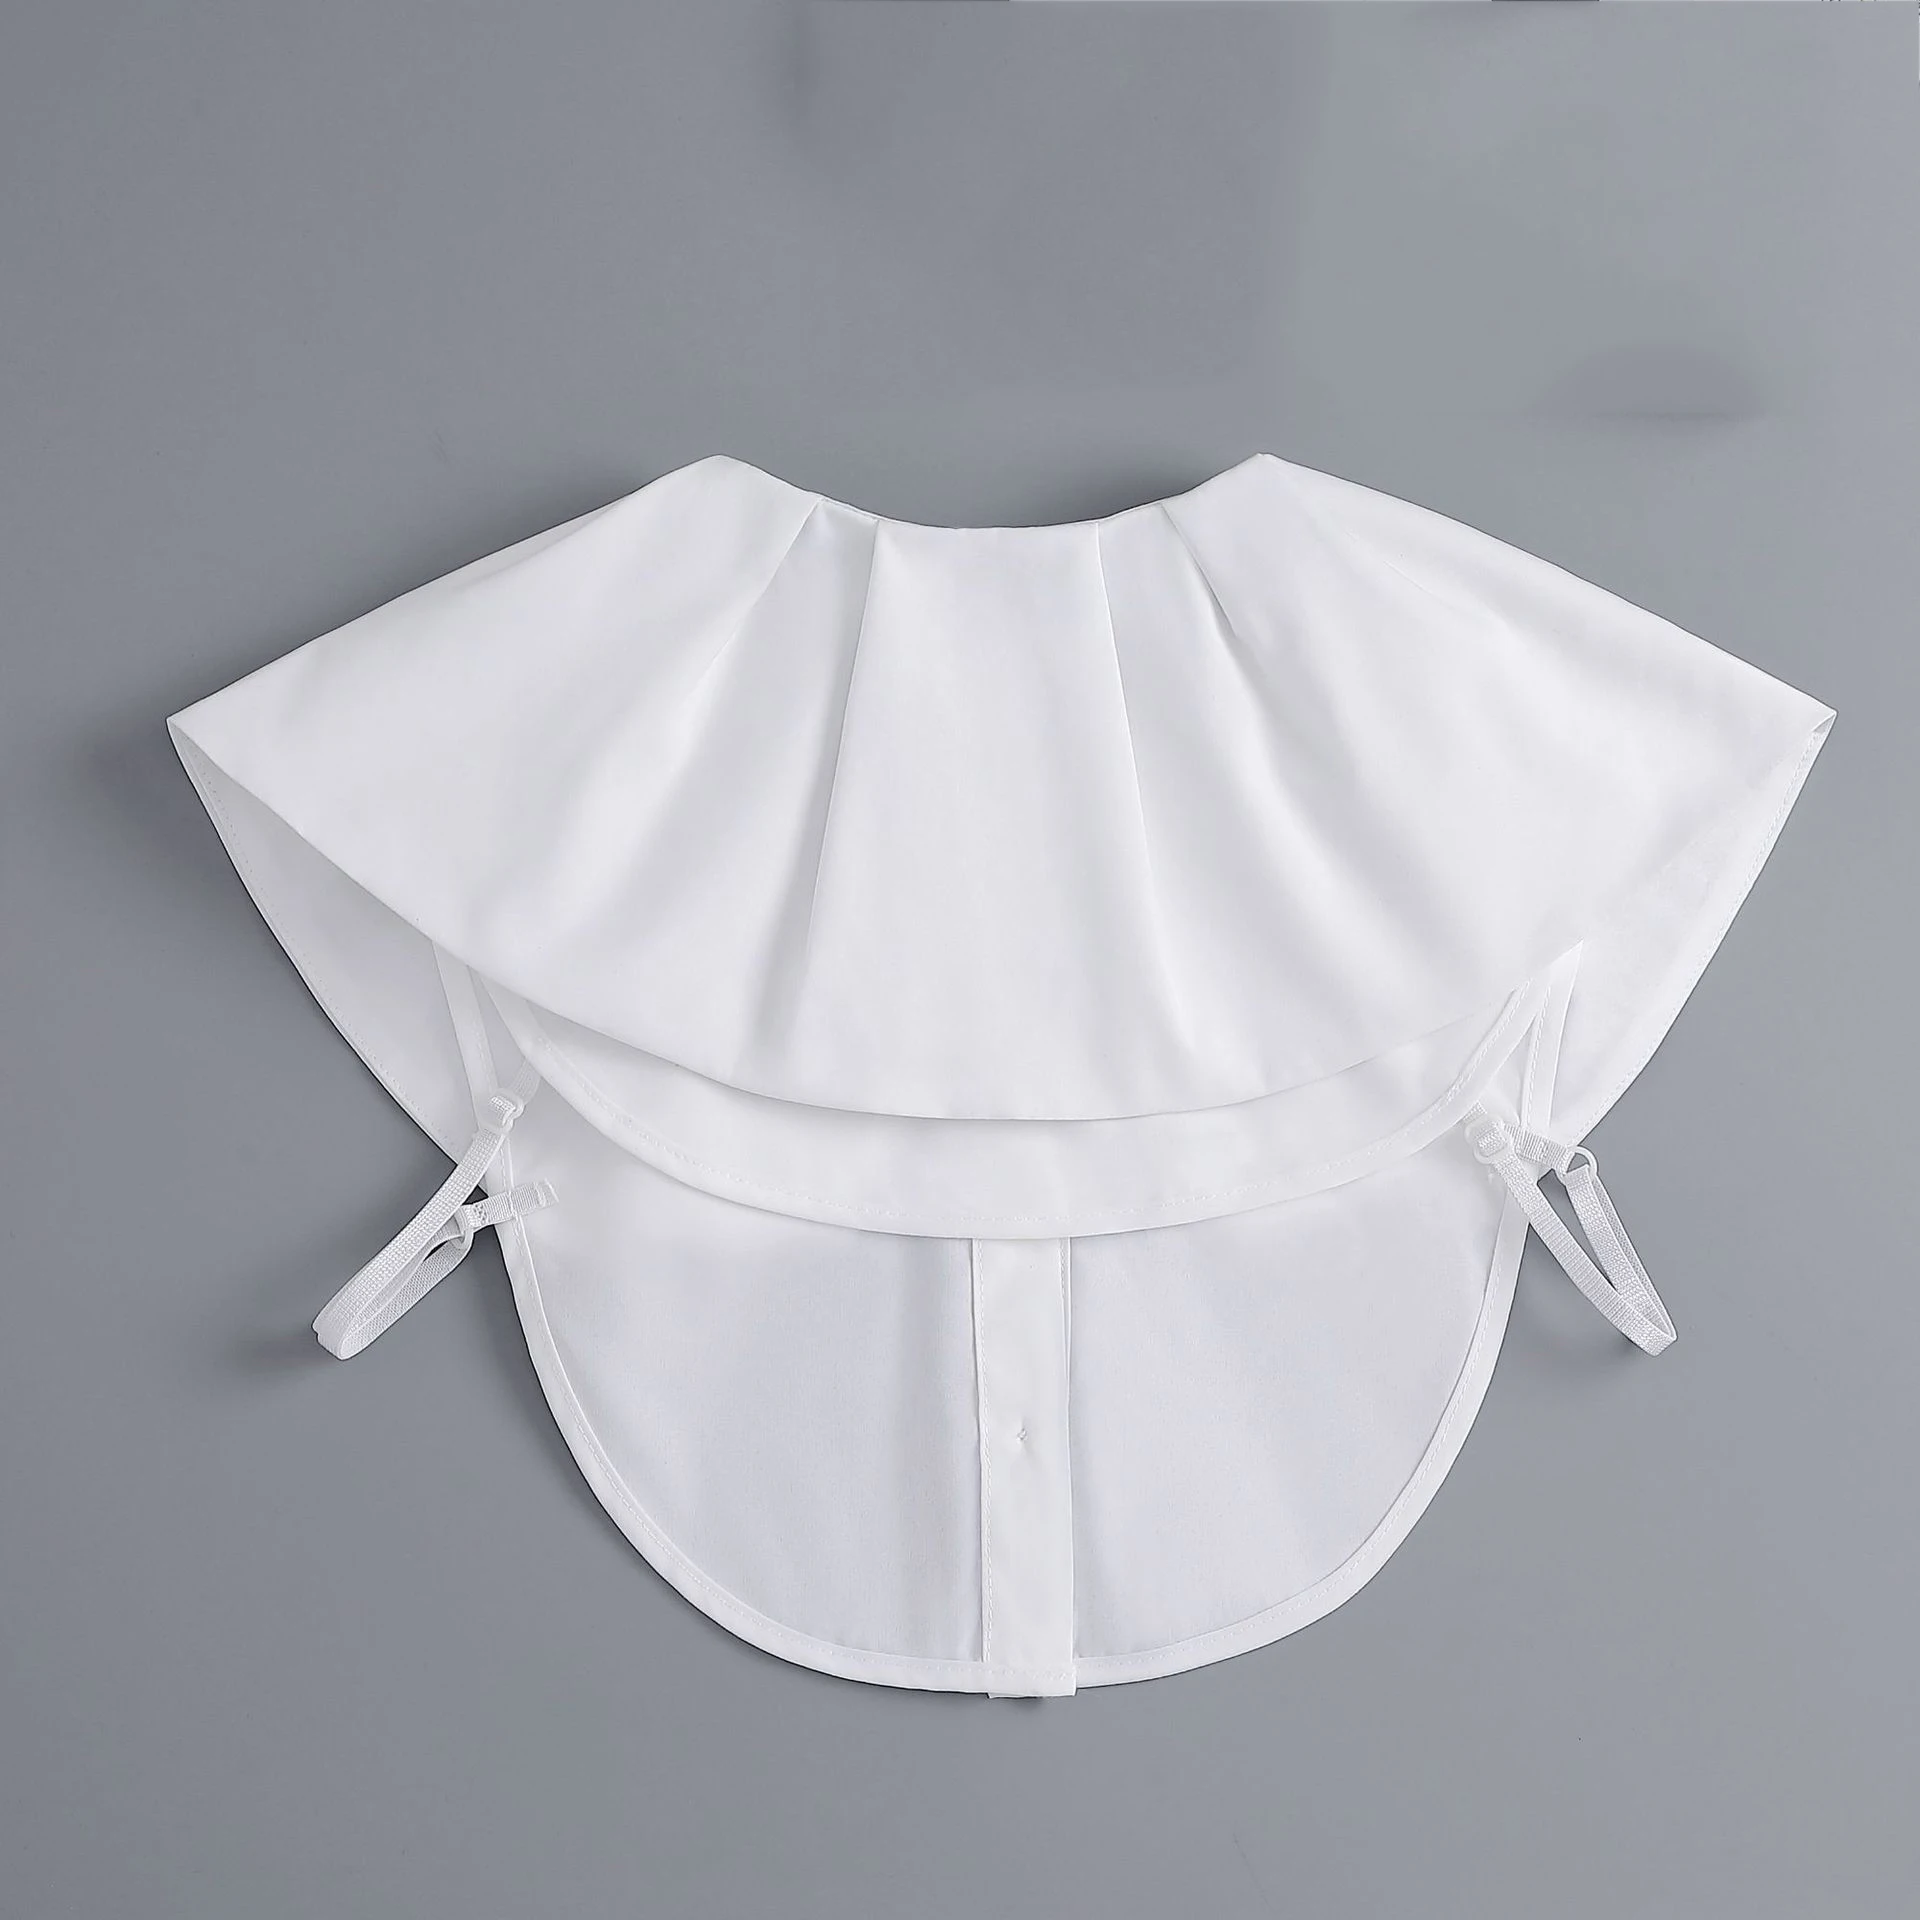 Korean Big Lapel Fake Collar For Womens False Collar Neckwear Decorative Female White Lapel Shirt Detachable Collar Accessories images - 6